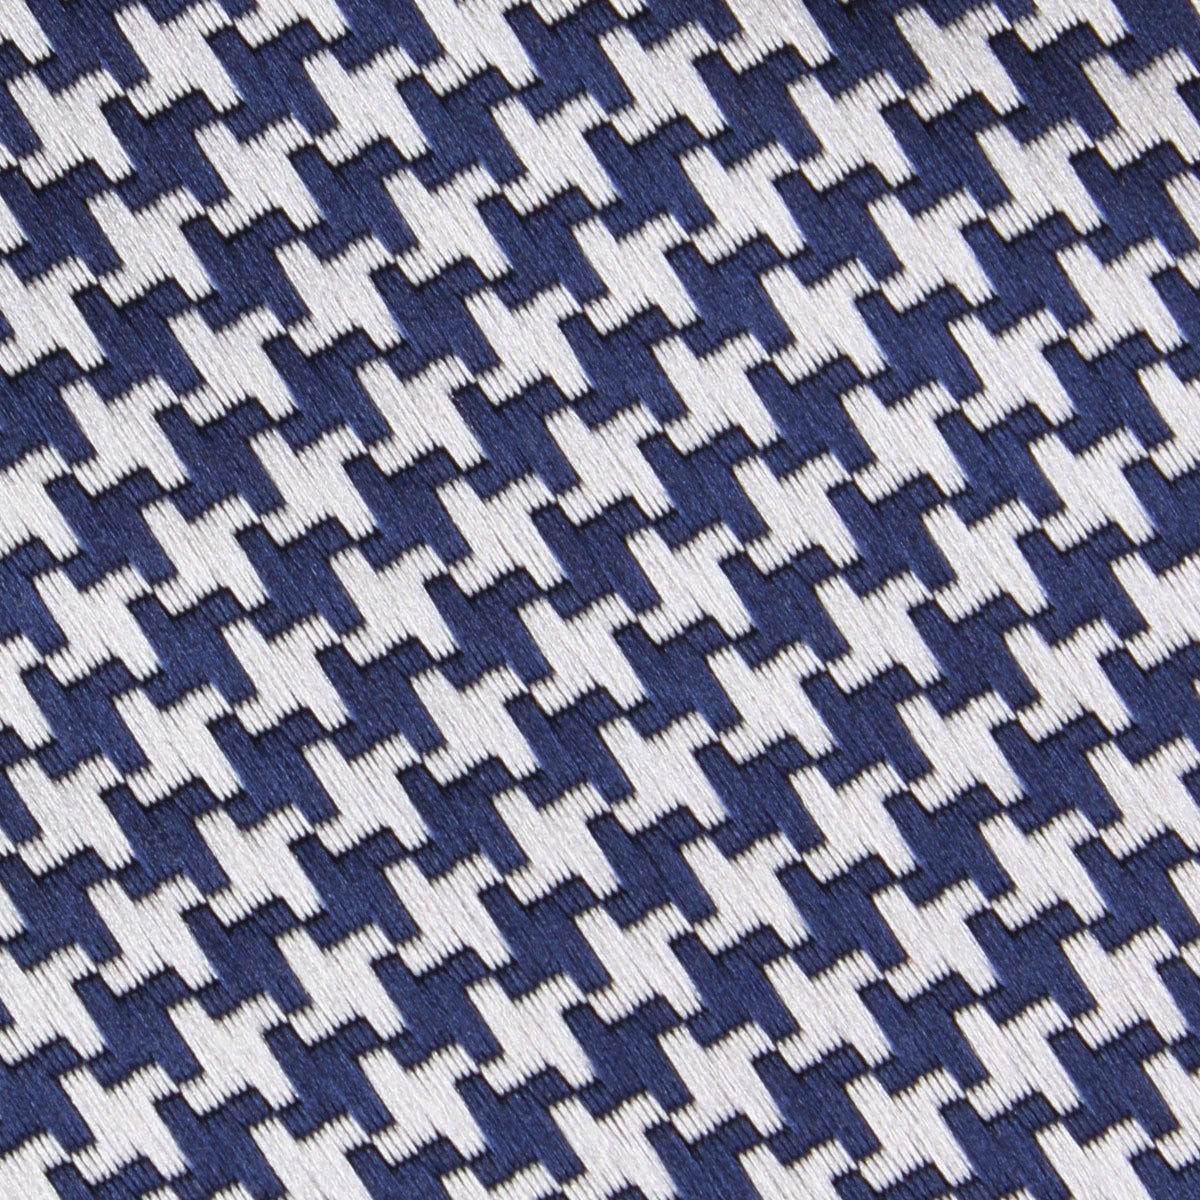 Deep Blue Houndstooth Fabric Pocket Square